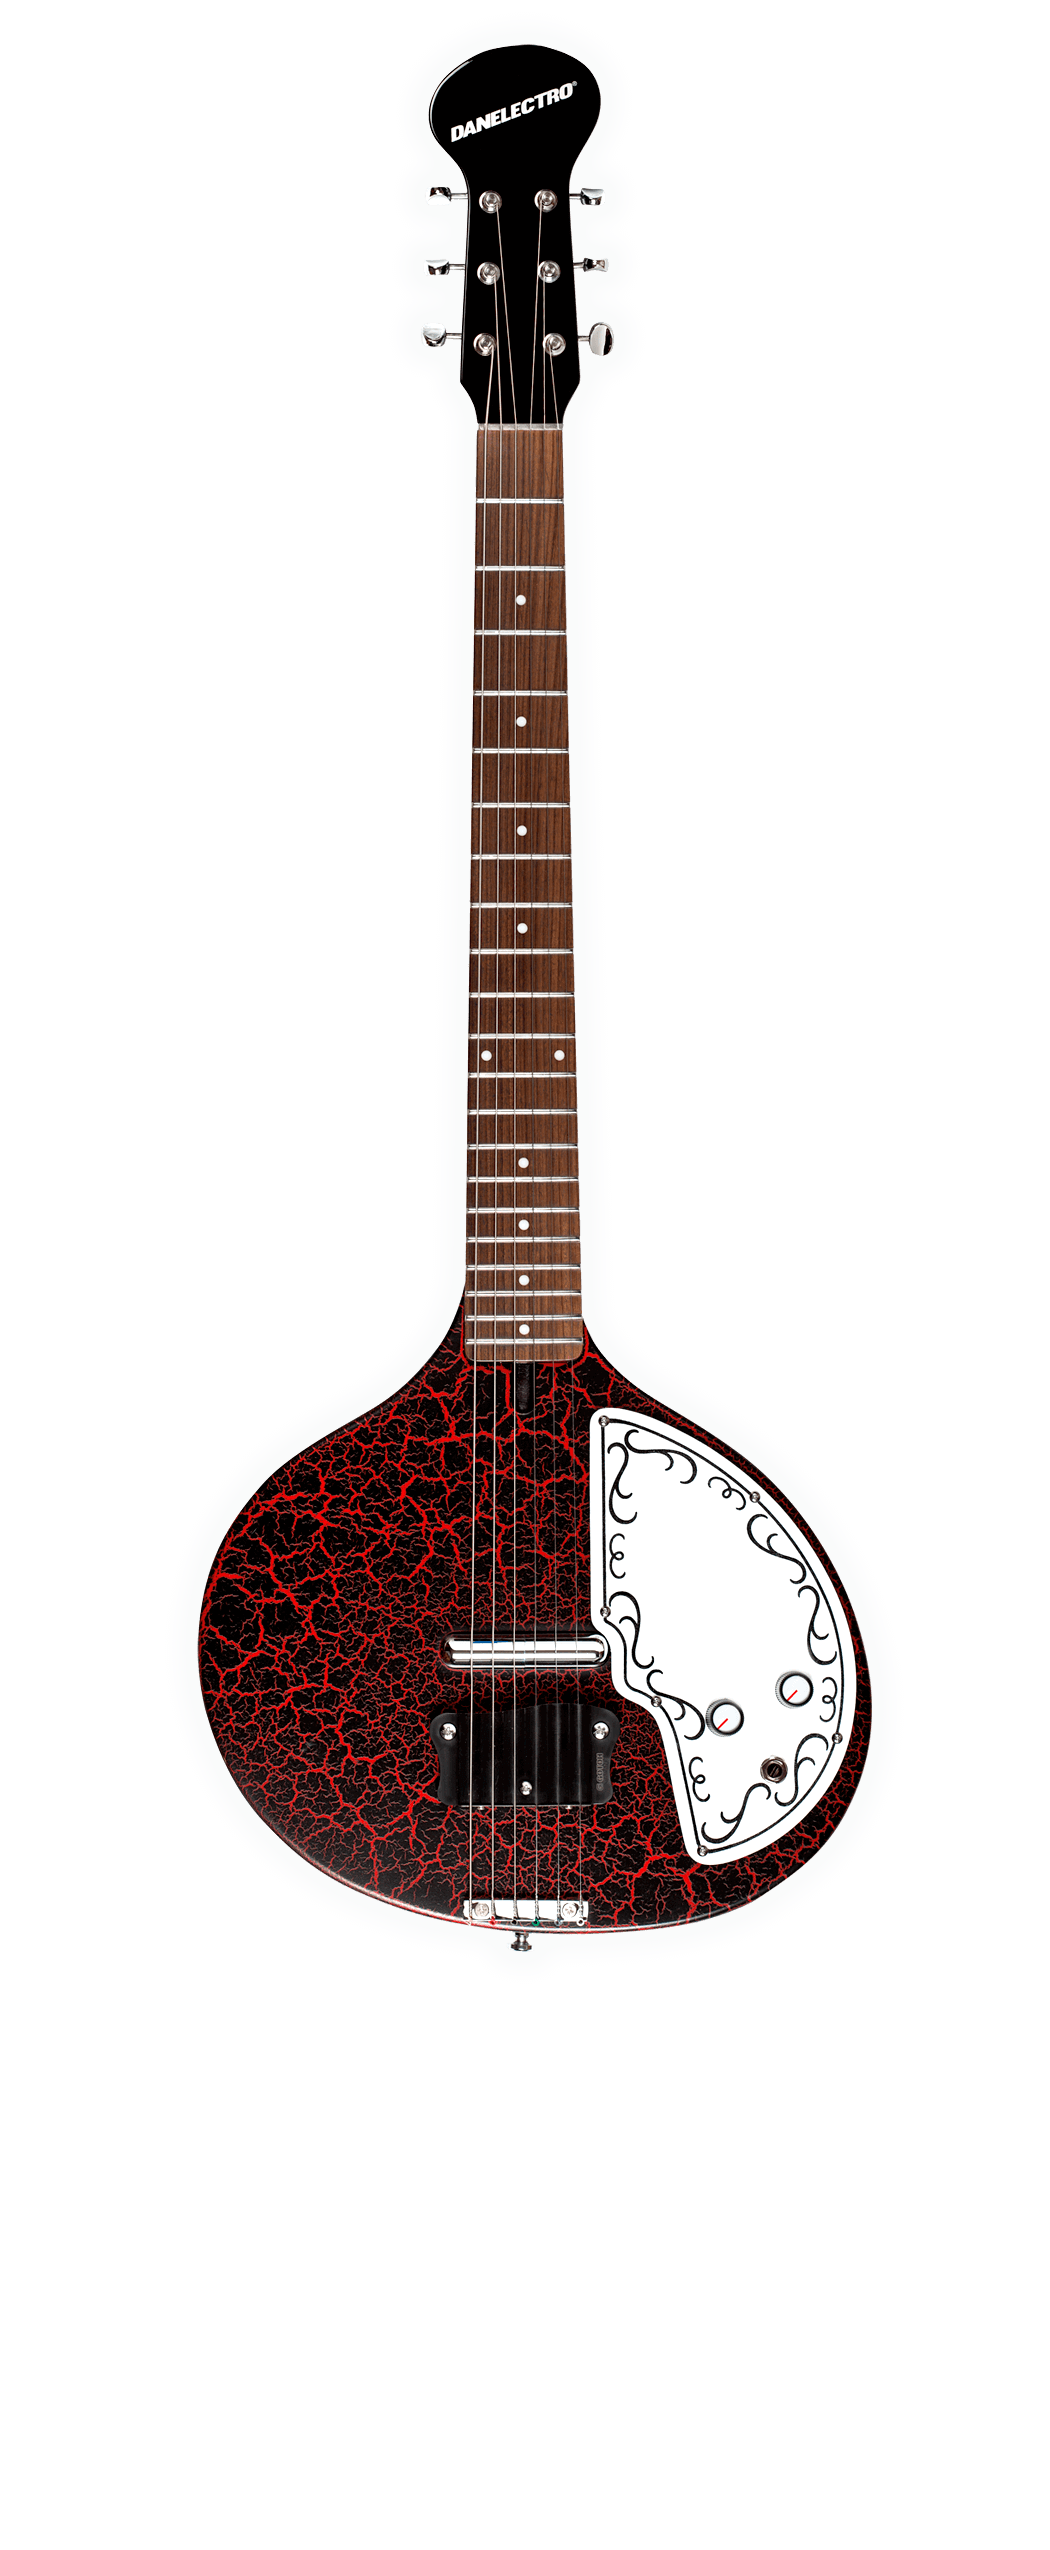 Sitar & Resonator | Danelectro Guitars